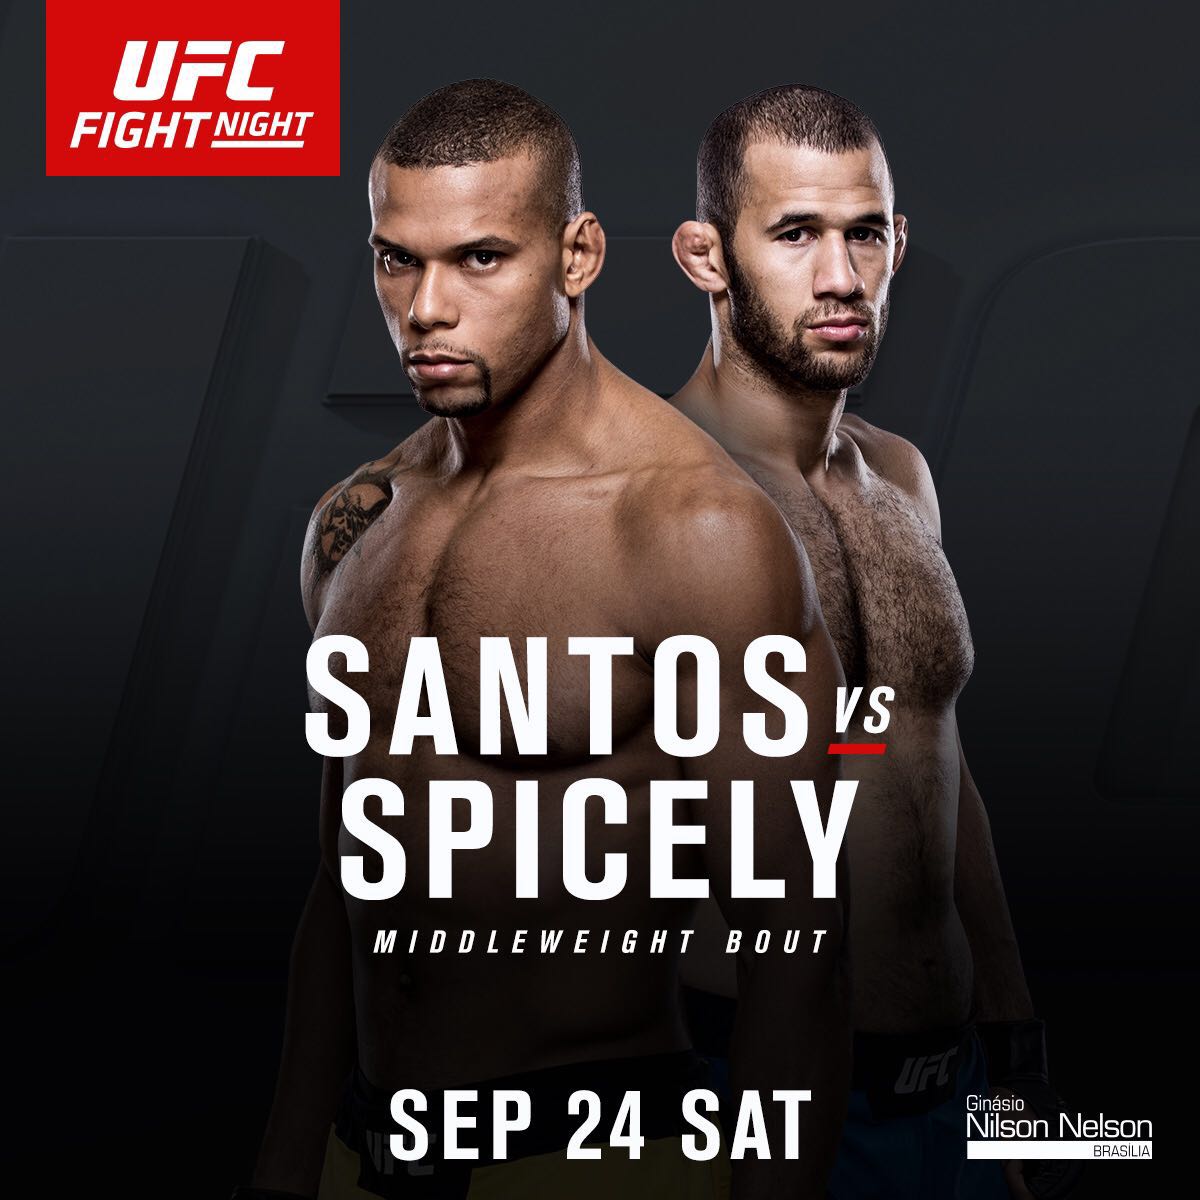 Poster/affiche UFC Fight Night 95